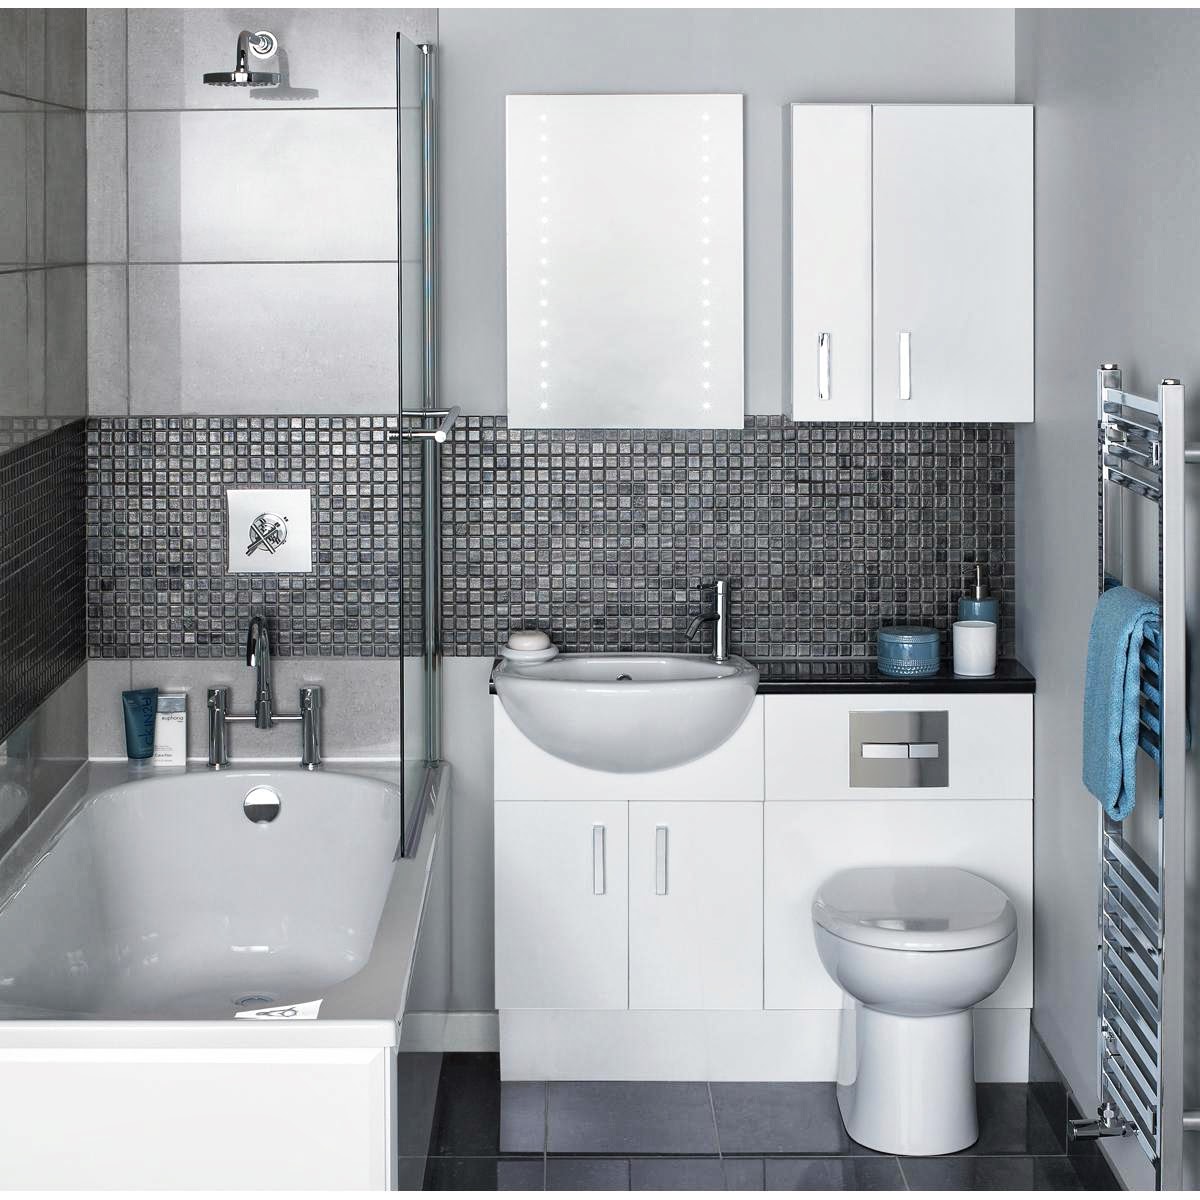 3d Bathroom Planner Online Free Nz Home Decorating Ideasbathroom Interior Design